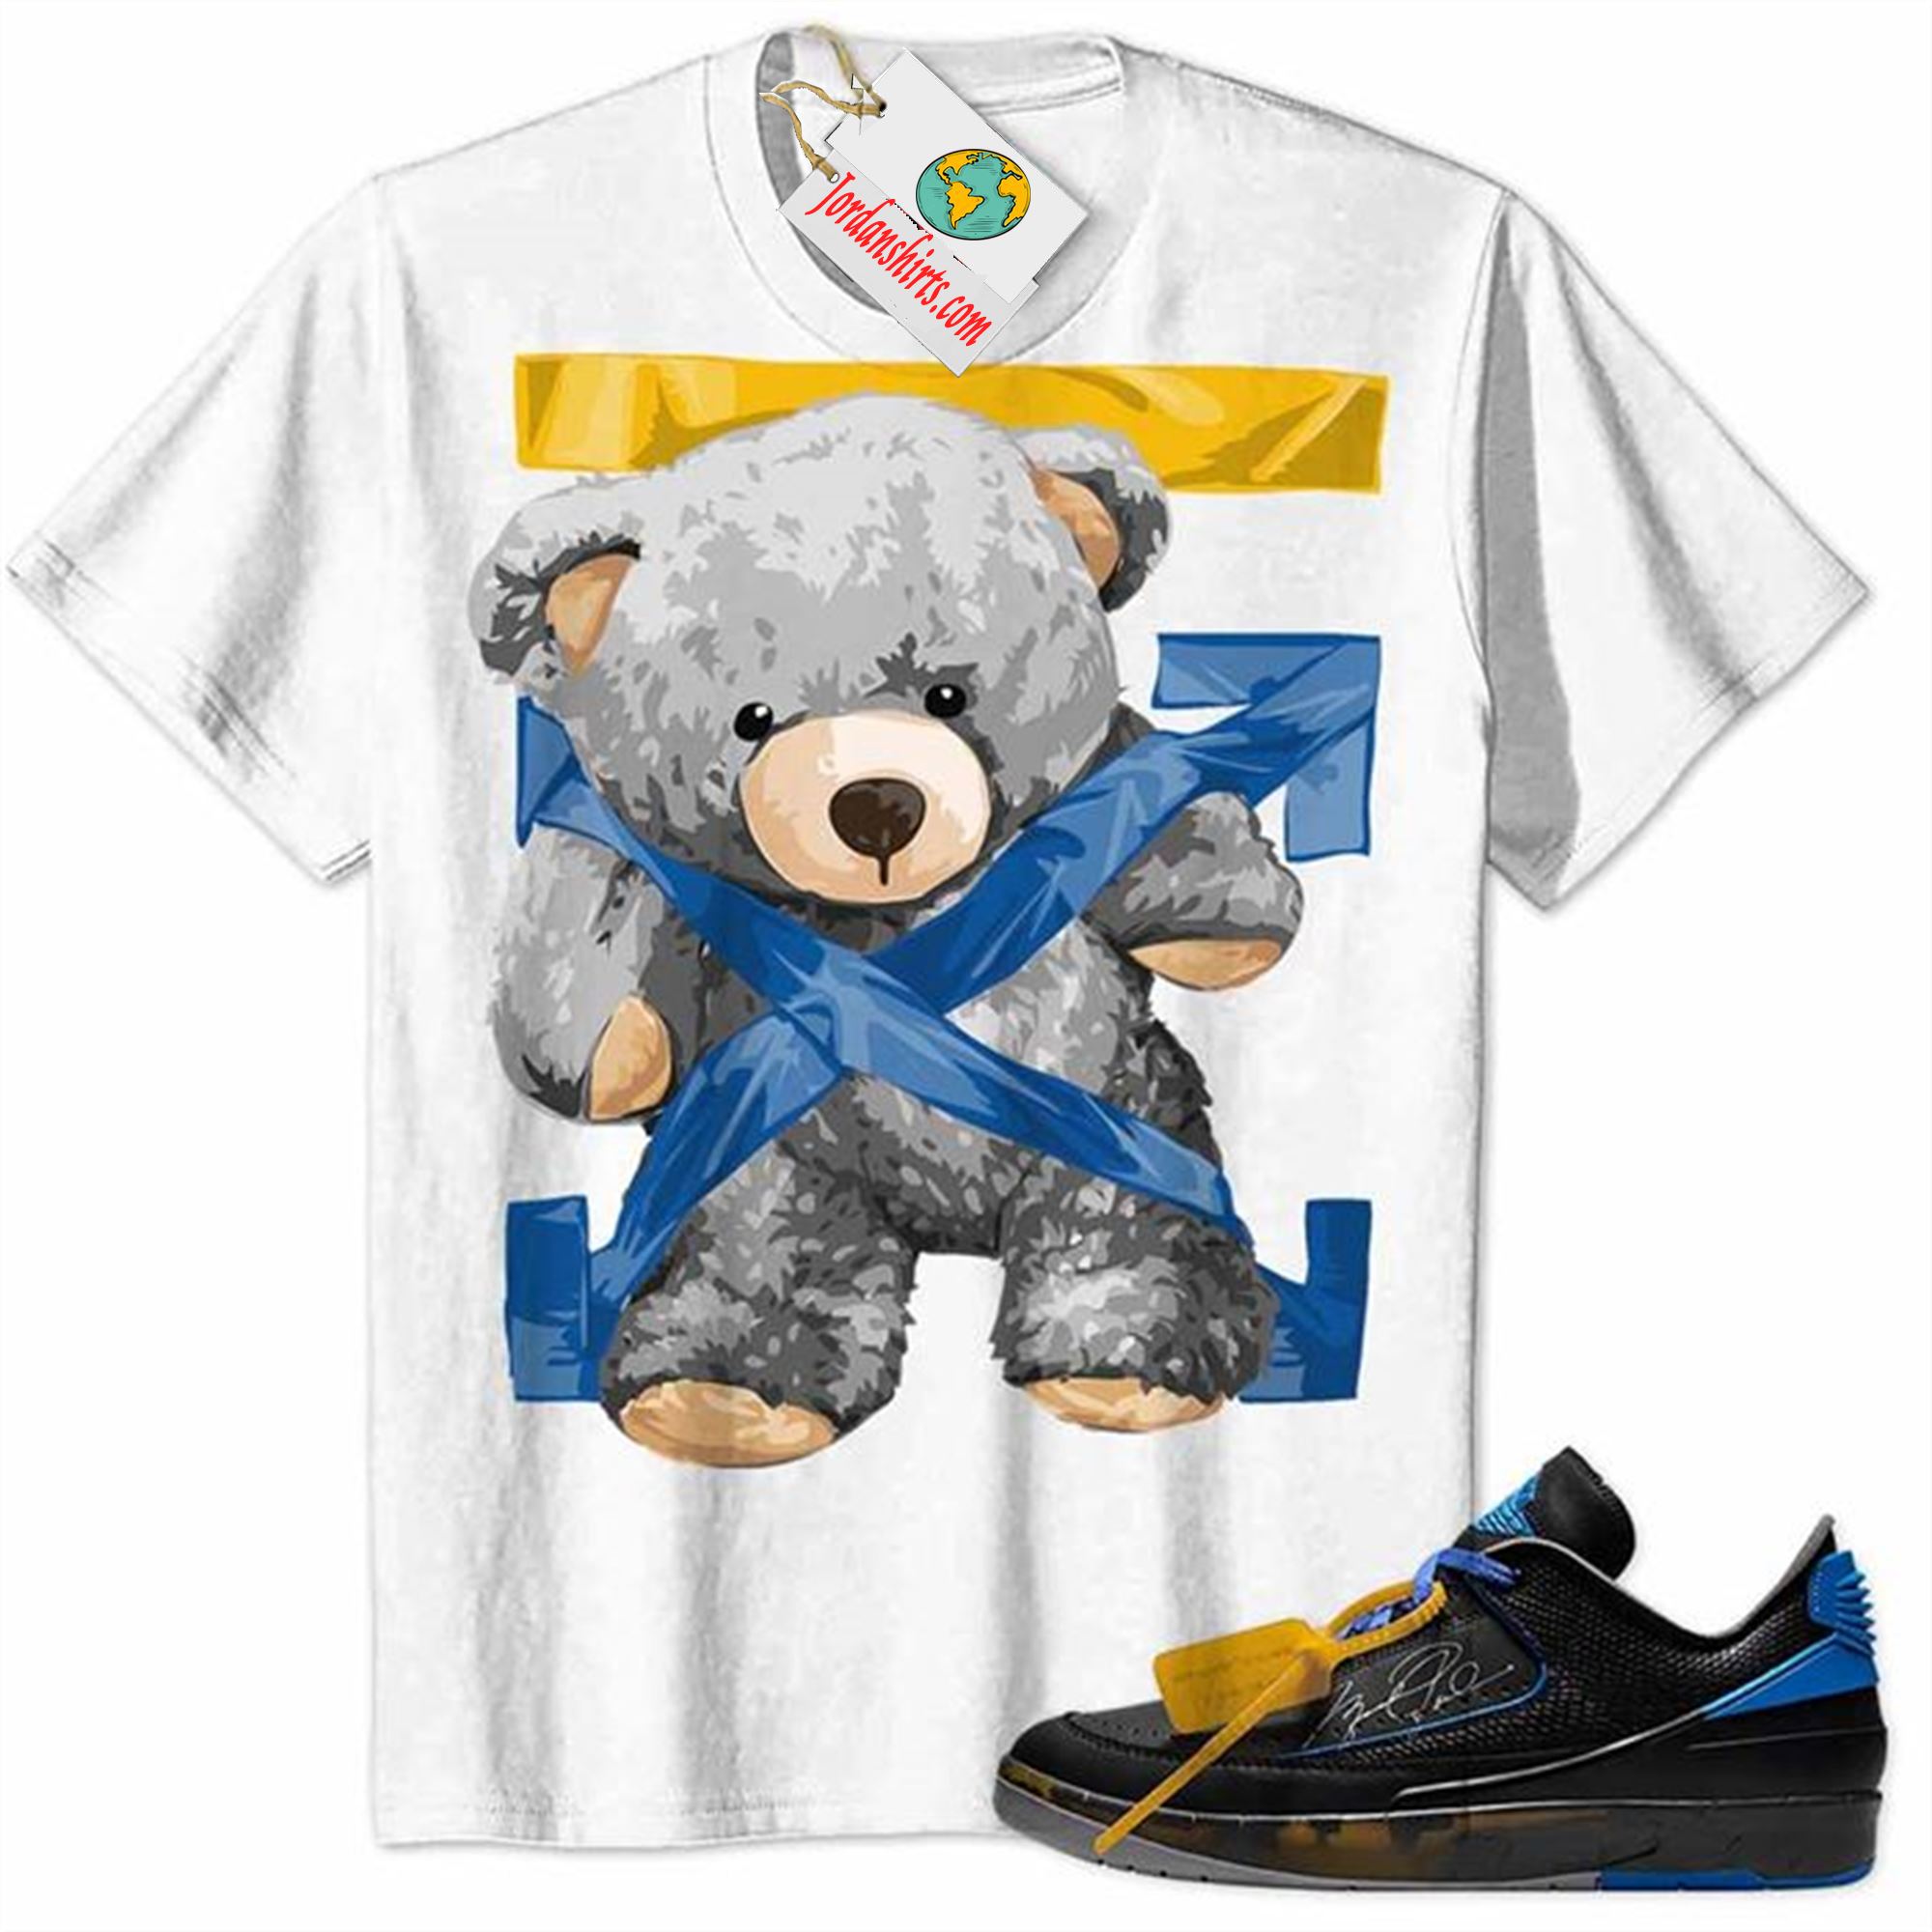 Jordan 2 Shirt, Teddy Bear Duck Tape White Air Jordan 2 Low X Off-white Black And Varsity Royal 2s Full Size Up To 5xl